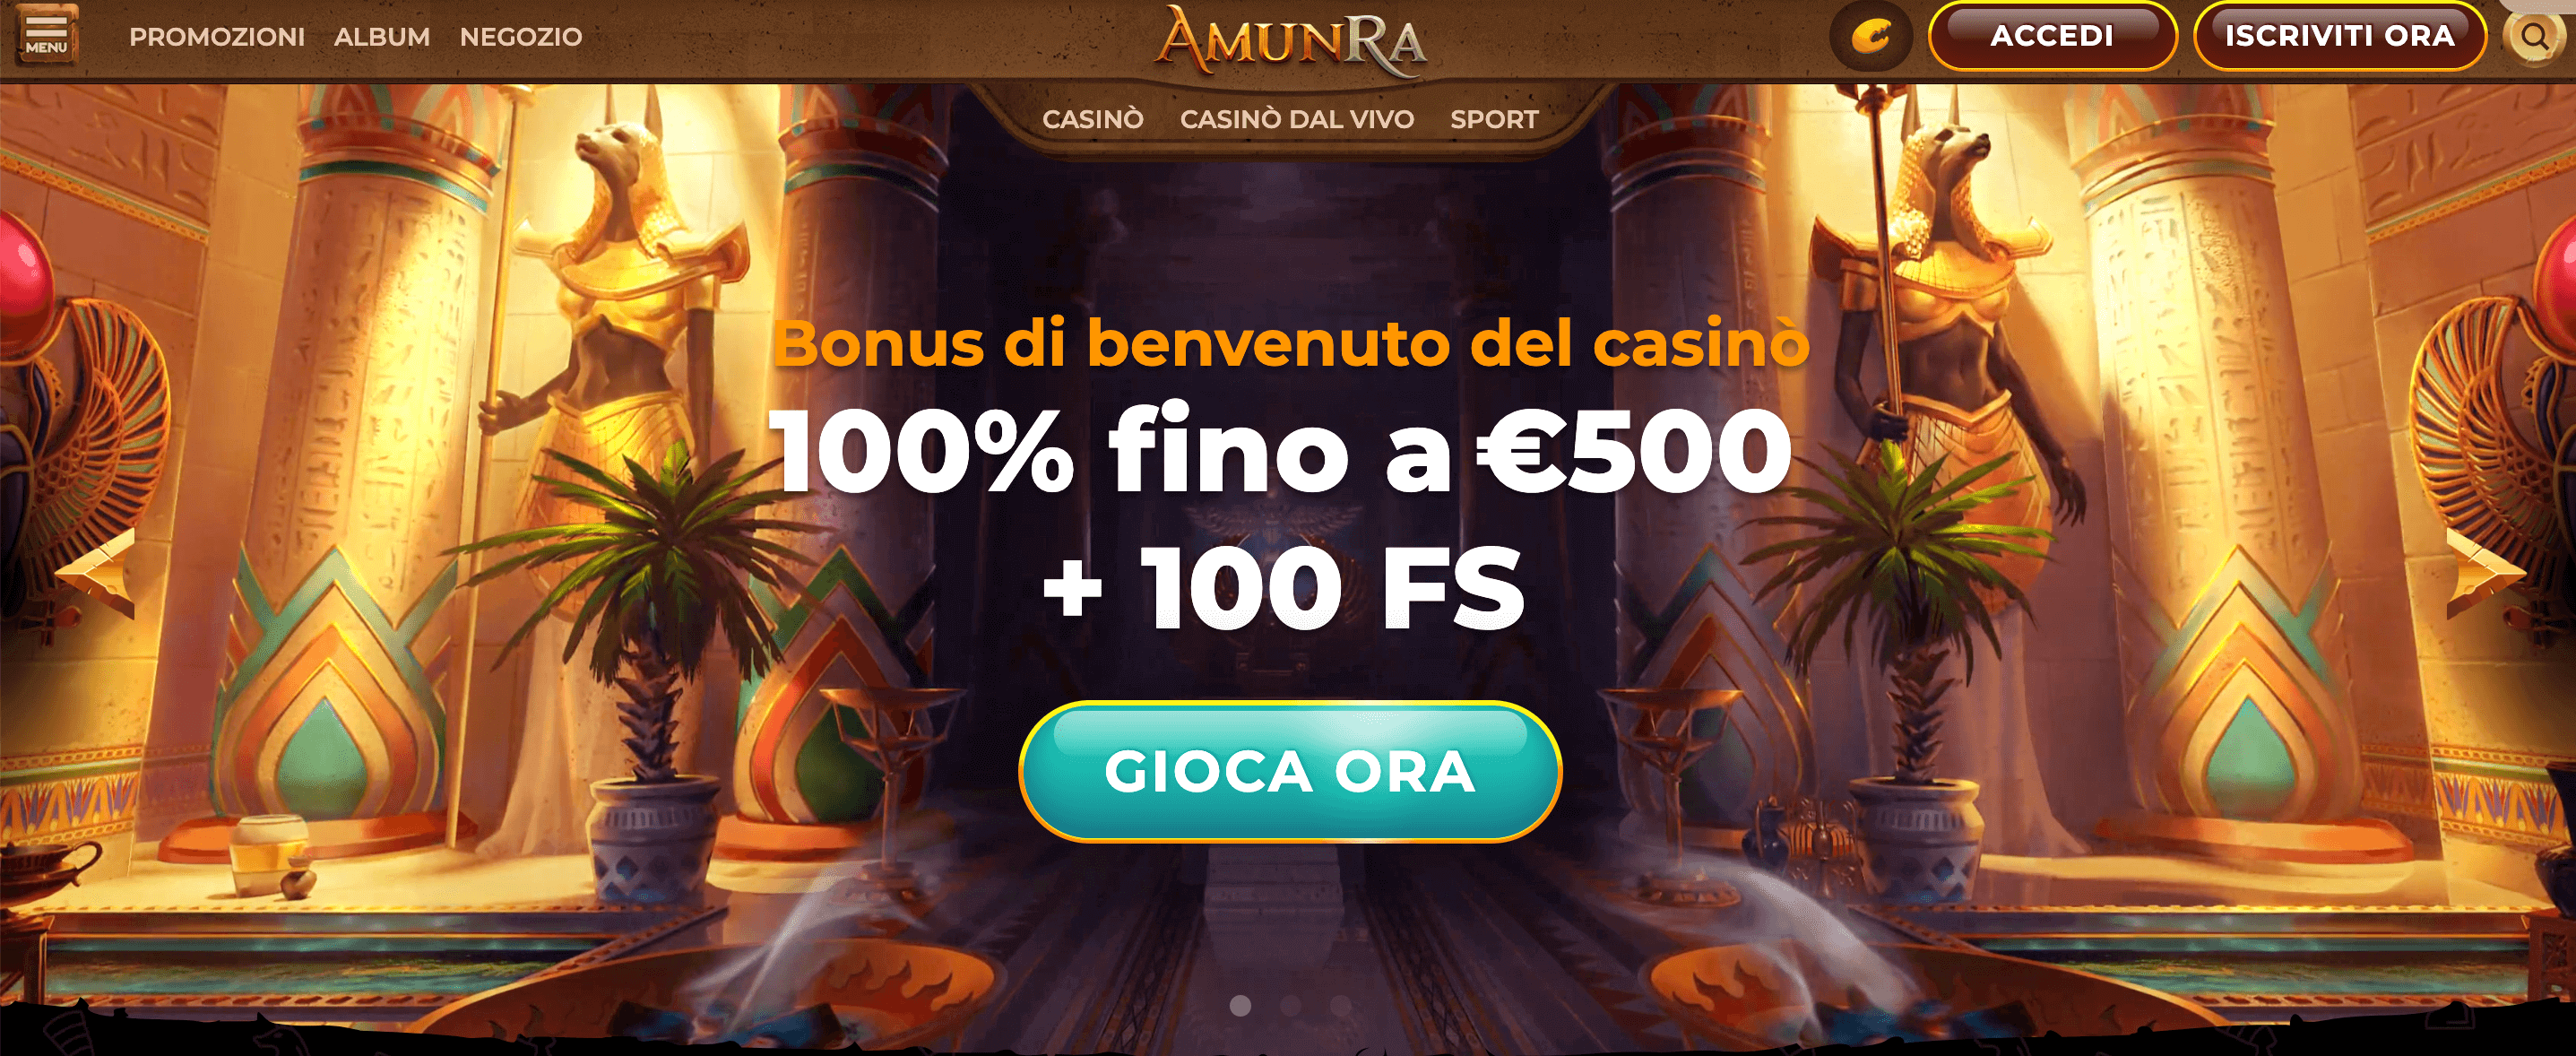 AmunRa Casino Home